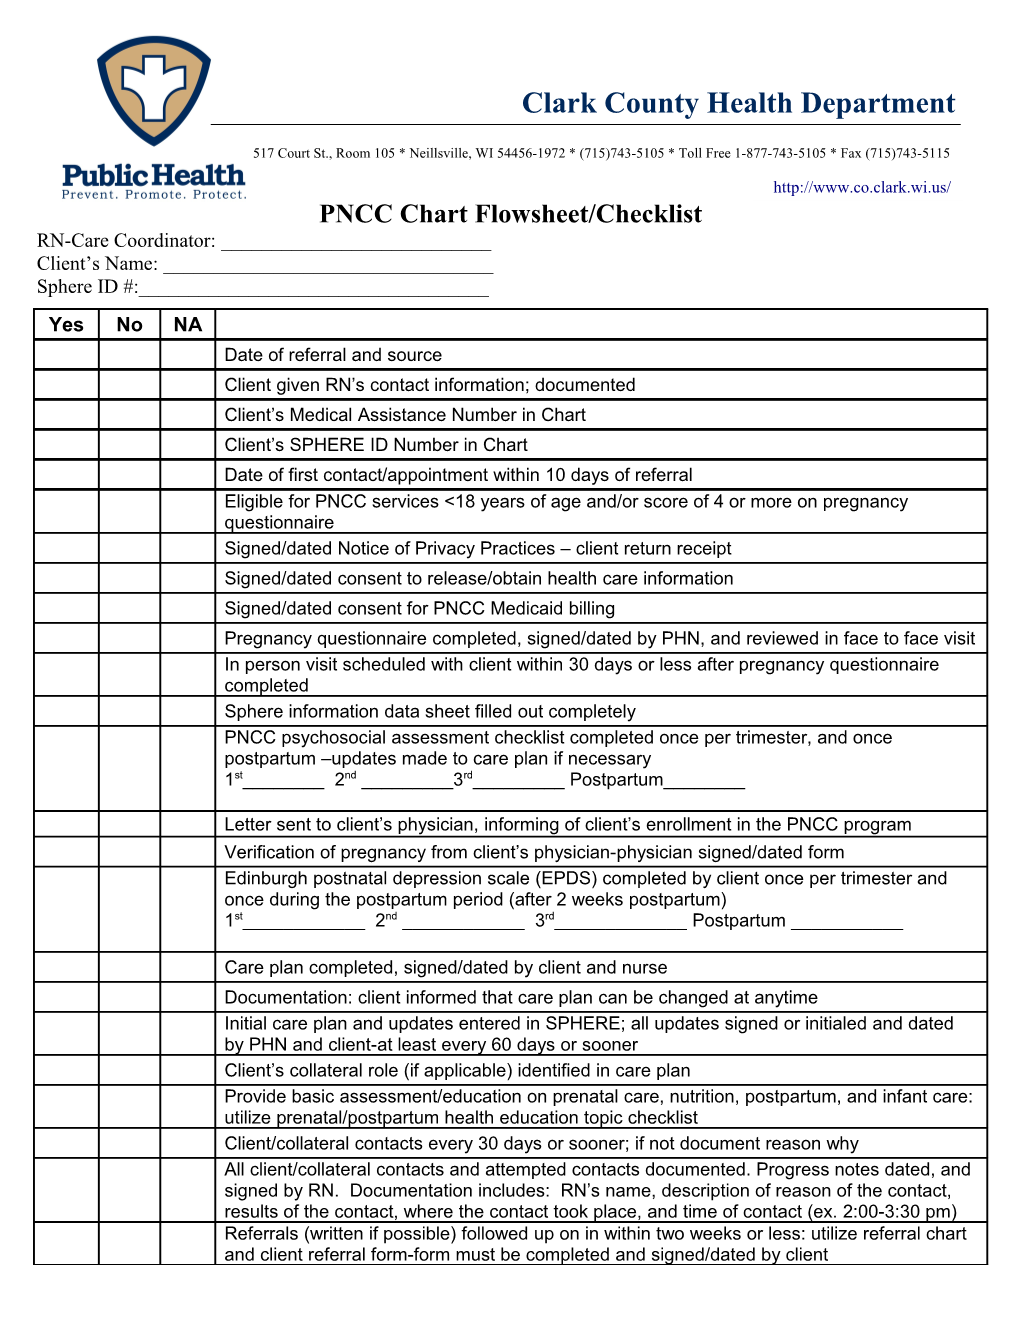 PNCC Chart Flowsheet/Checklist